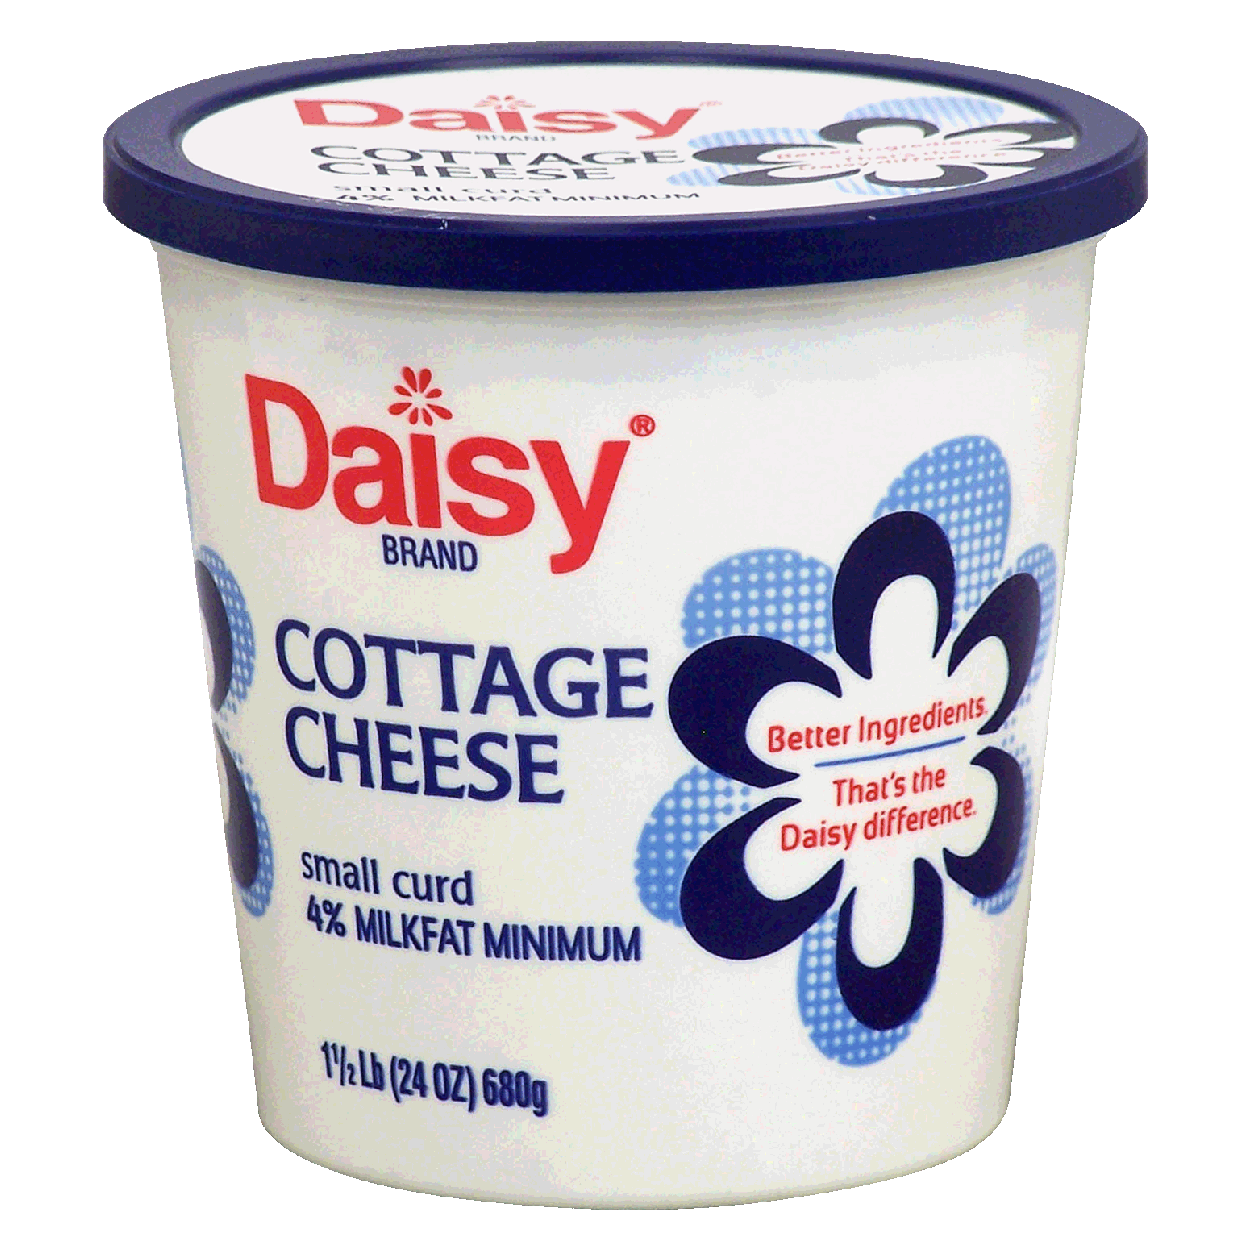 Daisy Cottage Cheese 4 Milkfat Minimum 24oz Regular Cheese